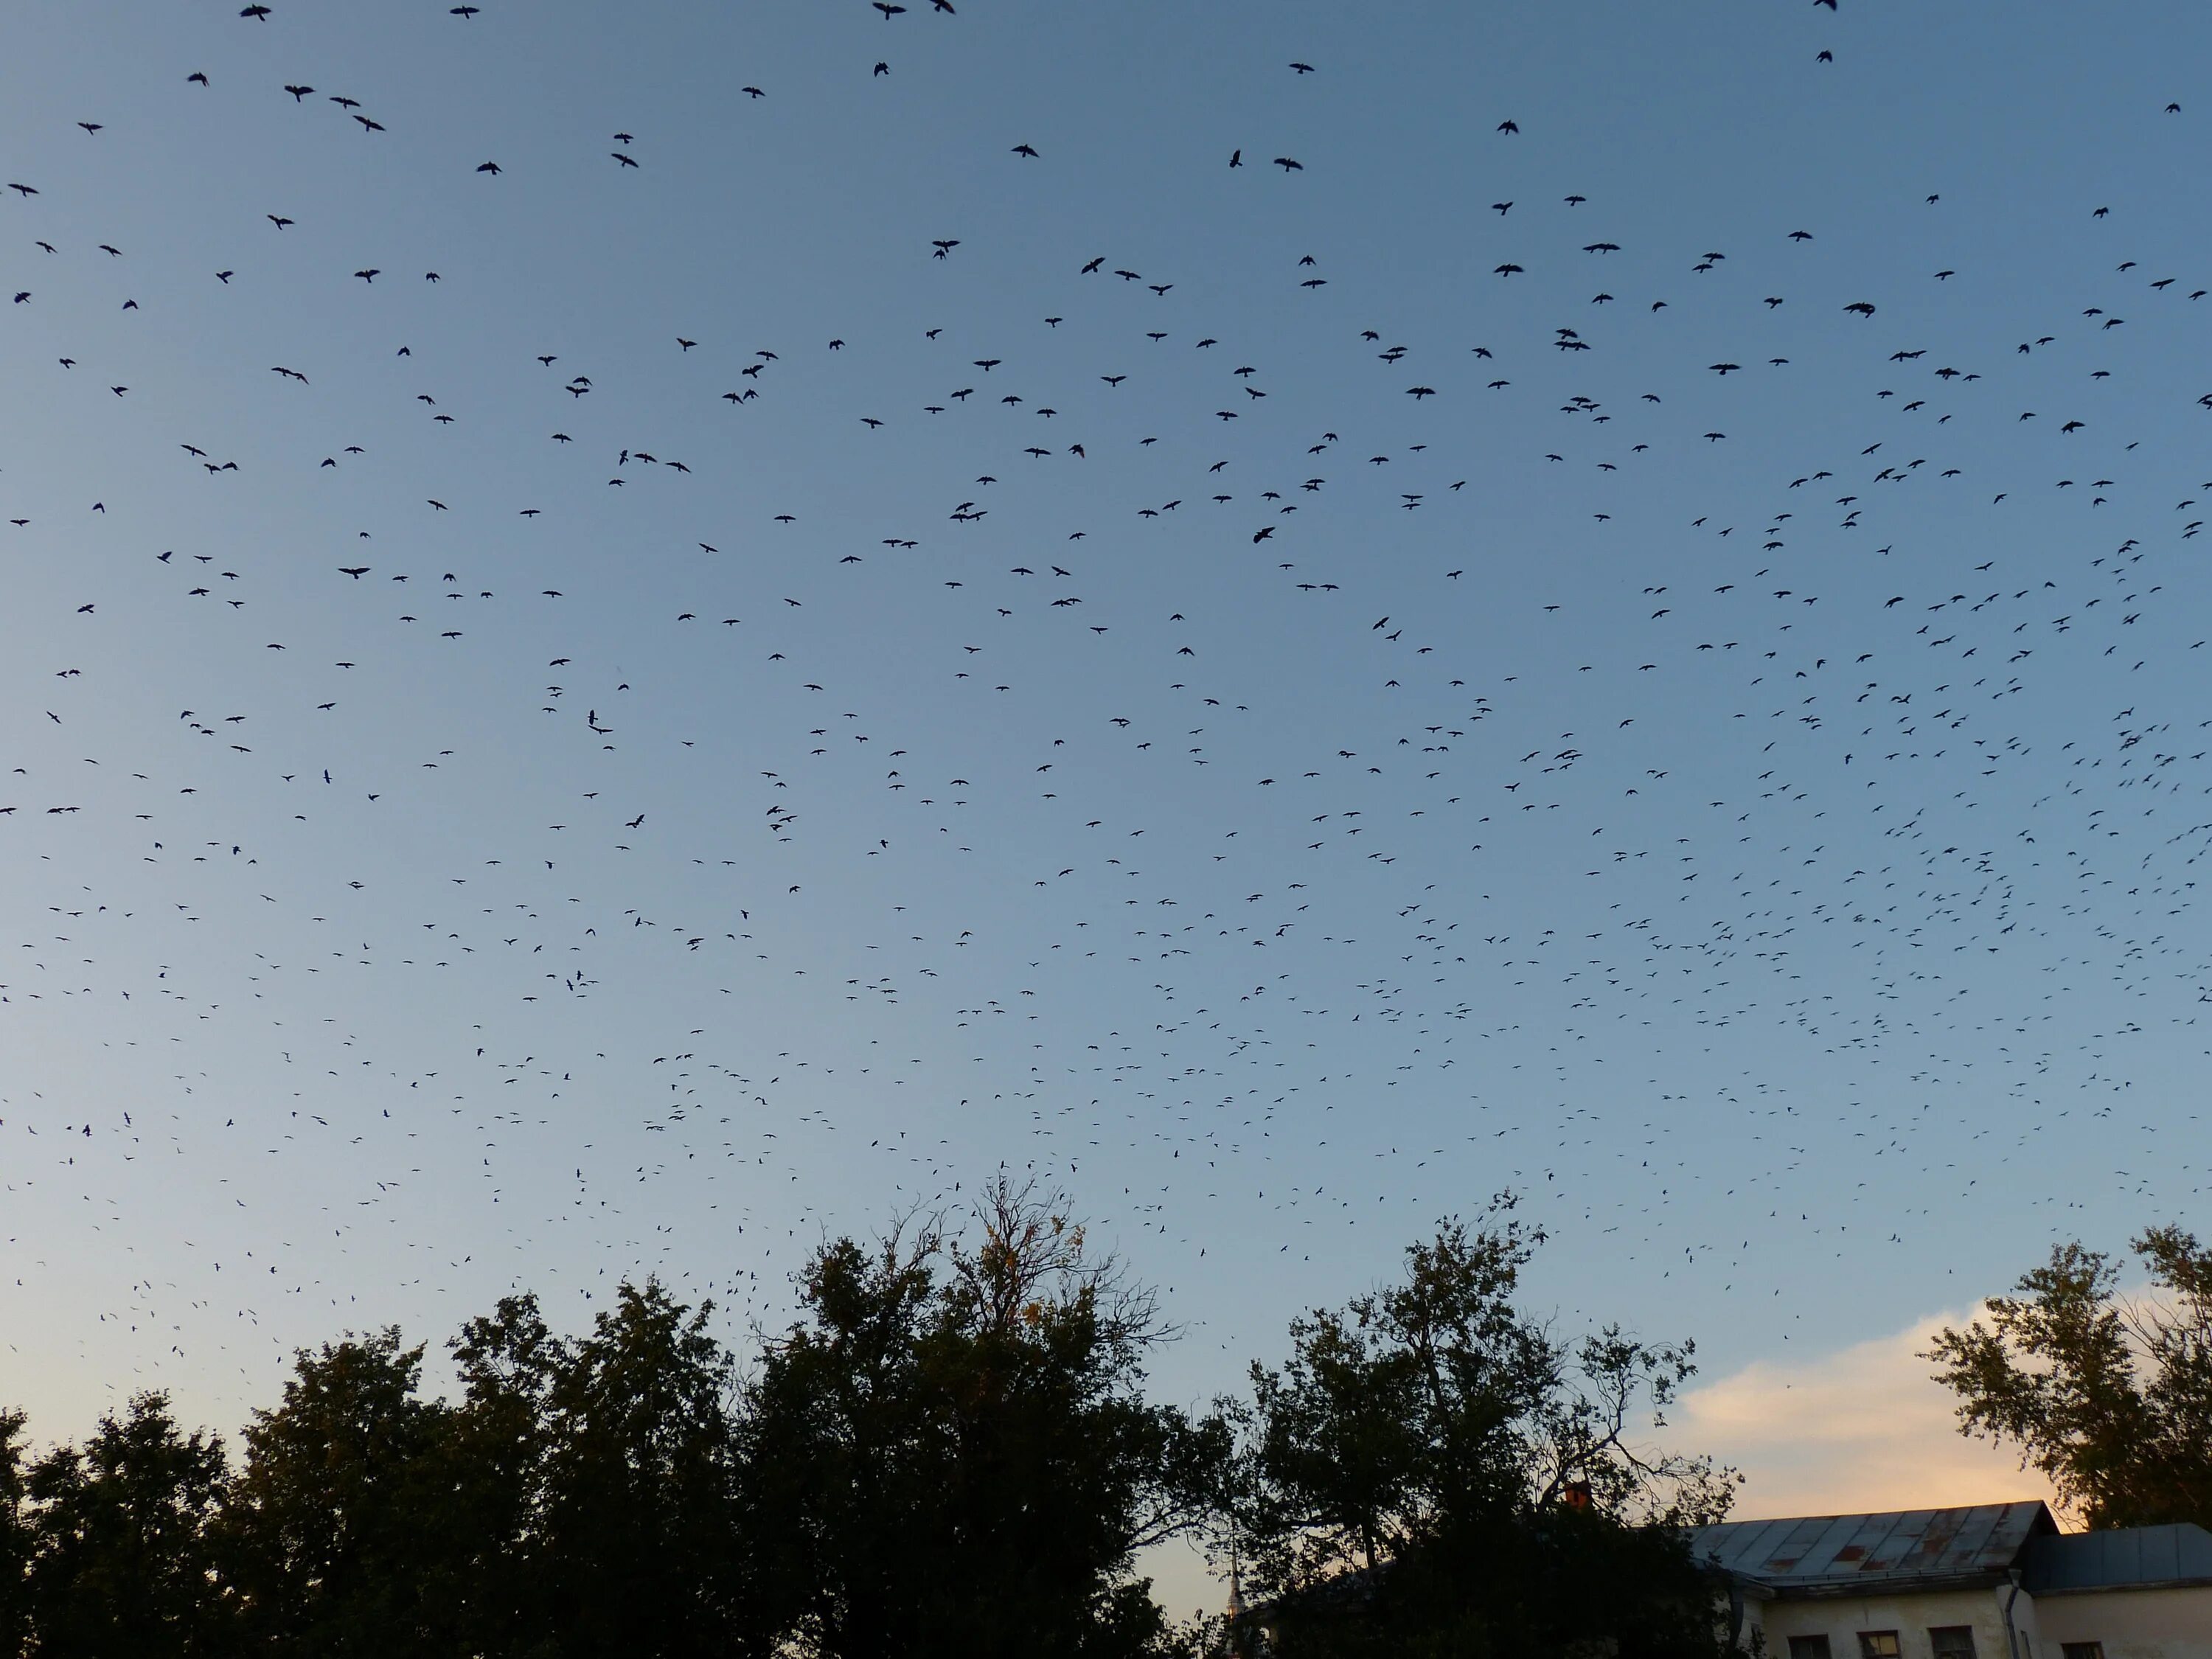 Flock of birds. Стая птиц. Стая птиц в небе. Миграция птиц. Птицы над Москвой.